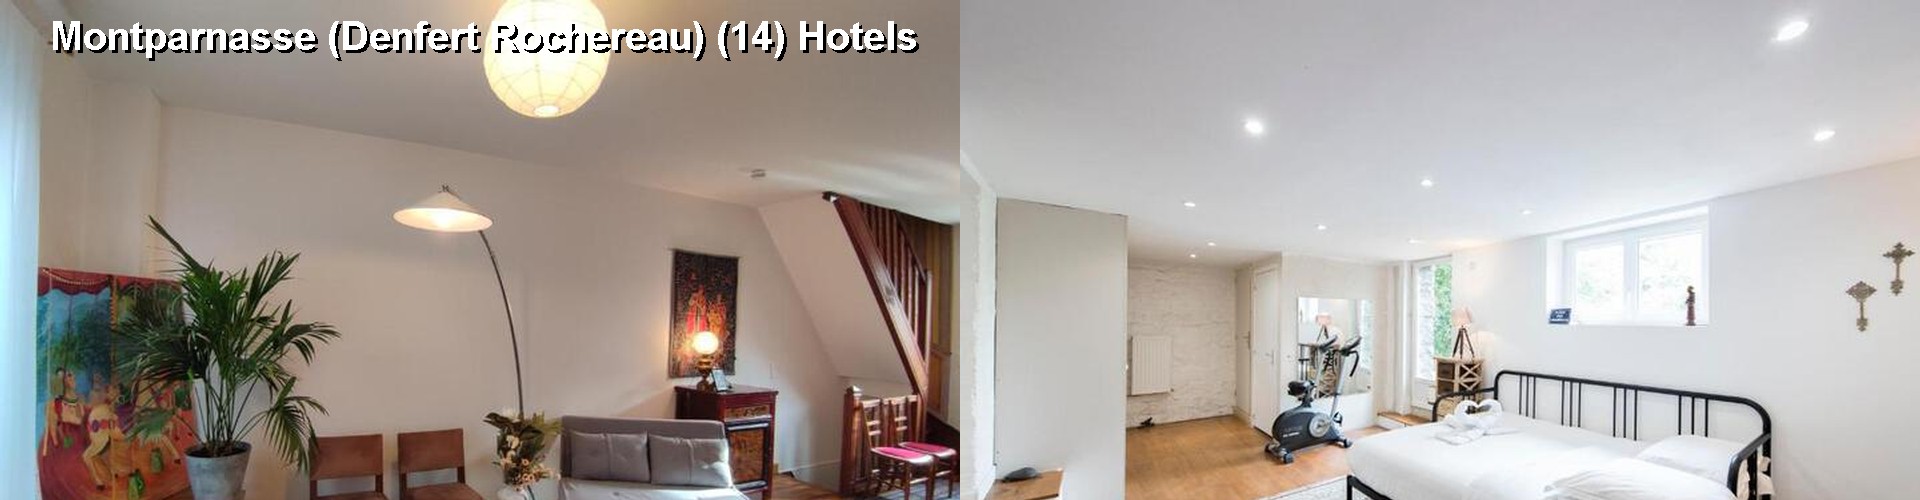 5 Best Hotels near Montparnasse (Denfert Rochereau) (14)